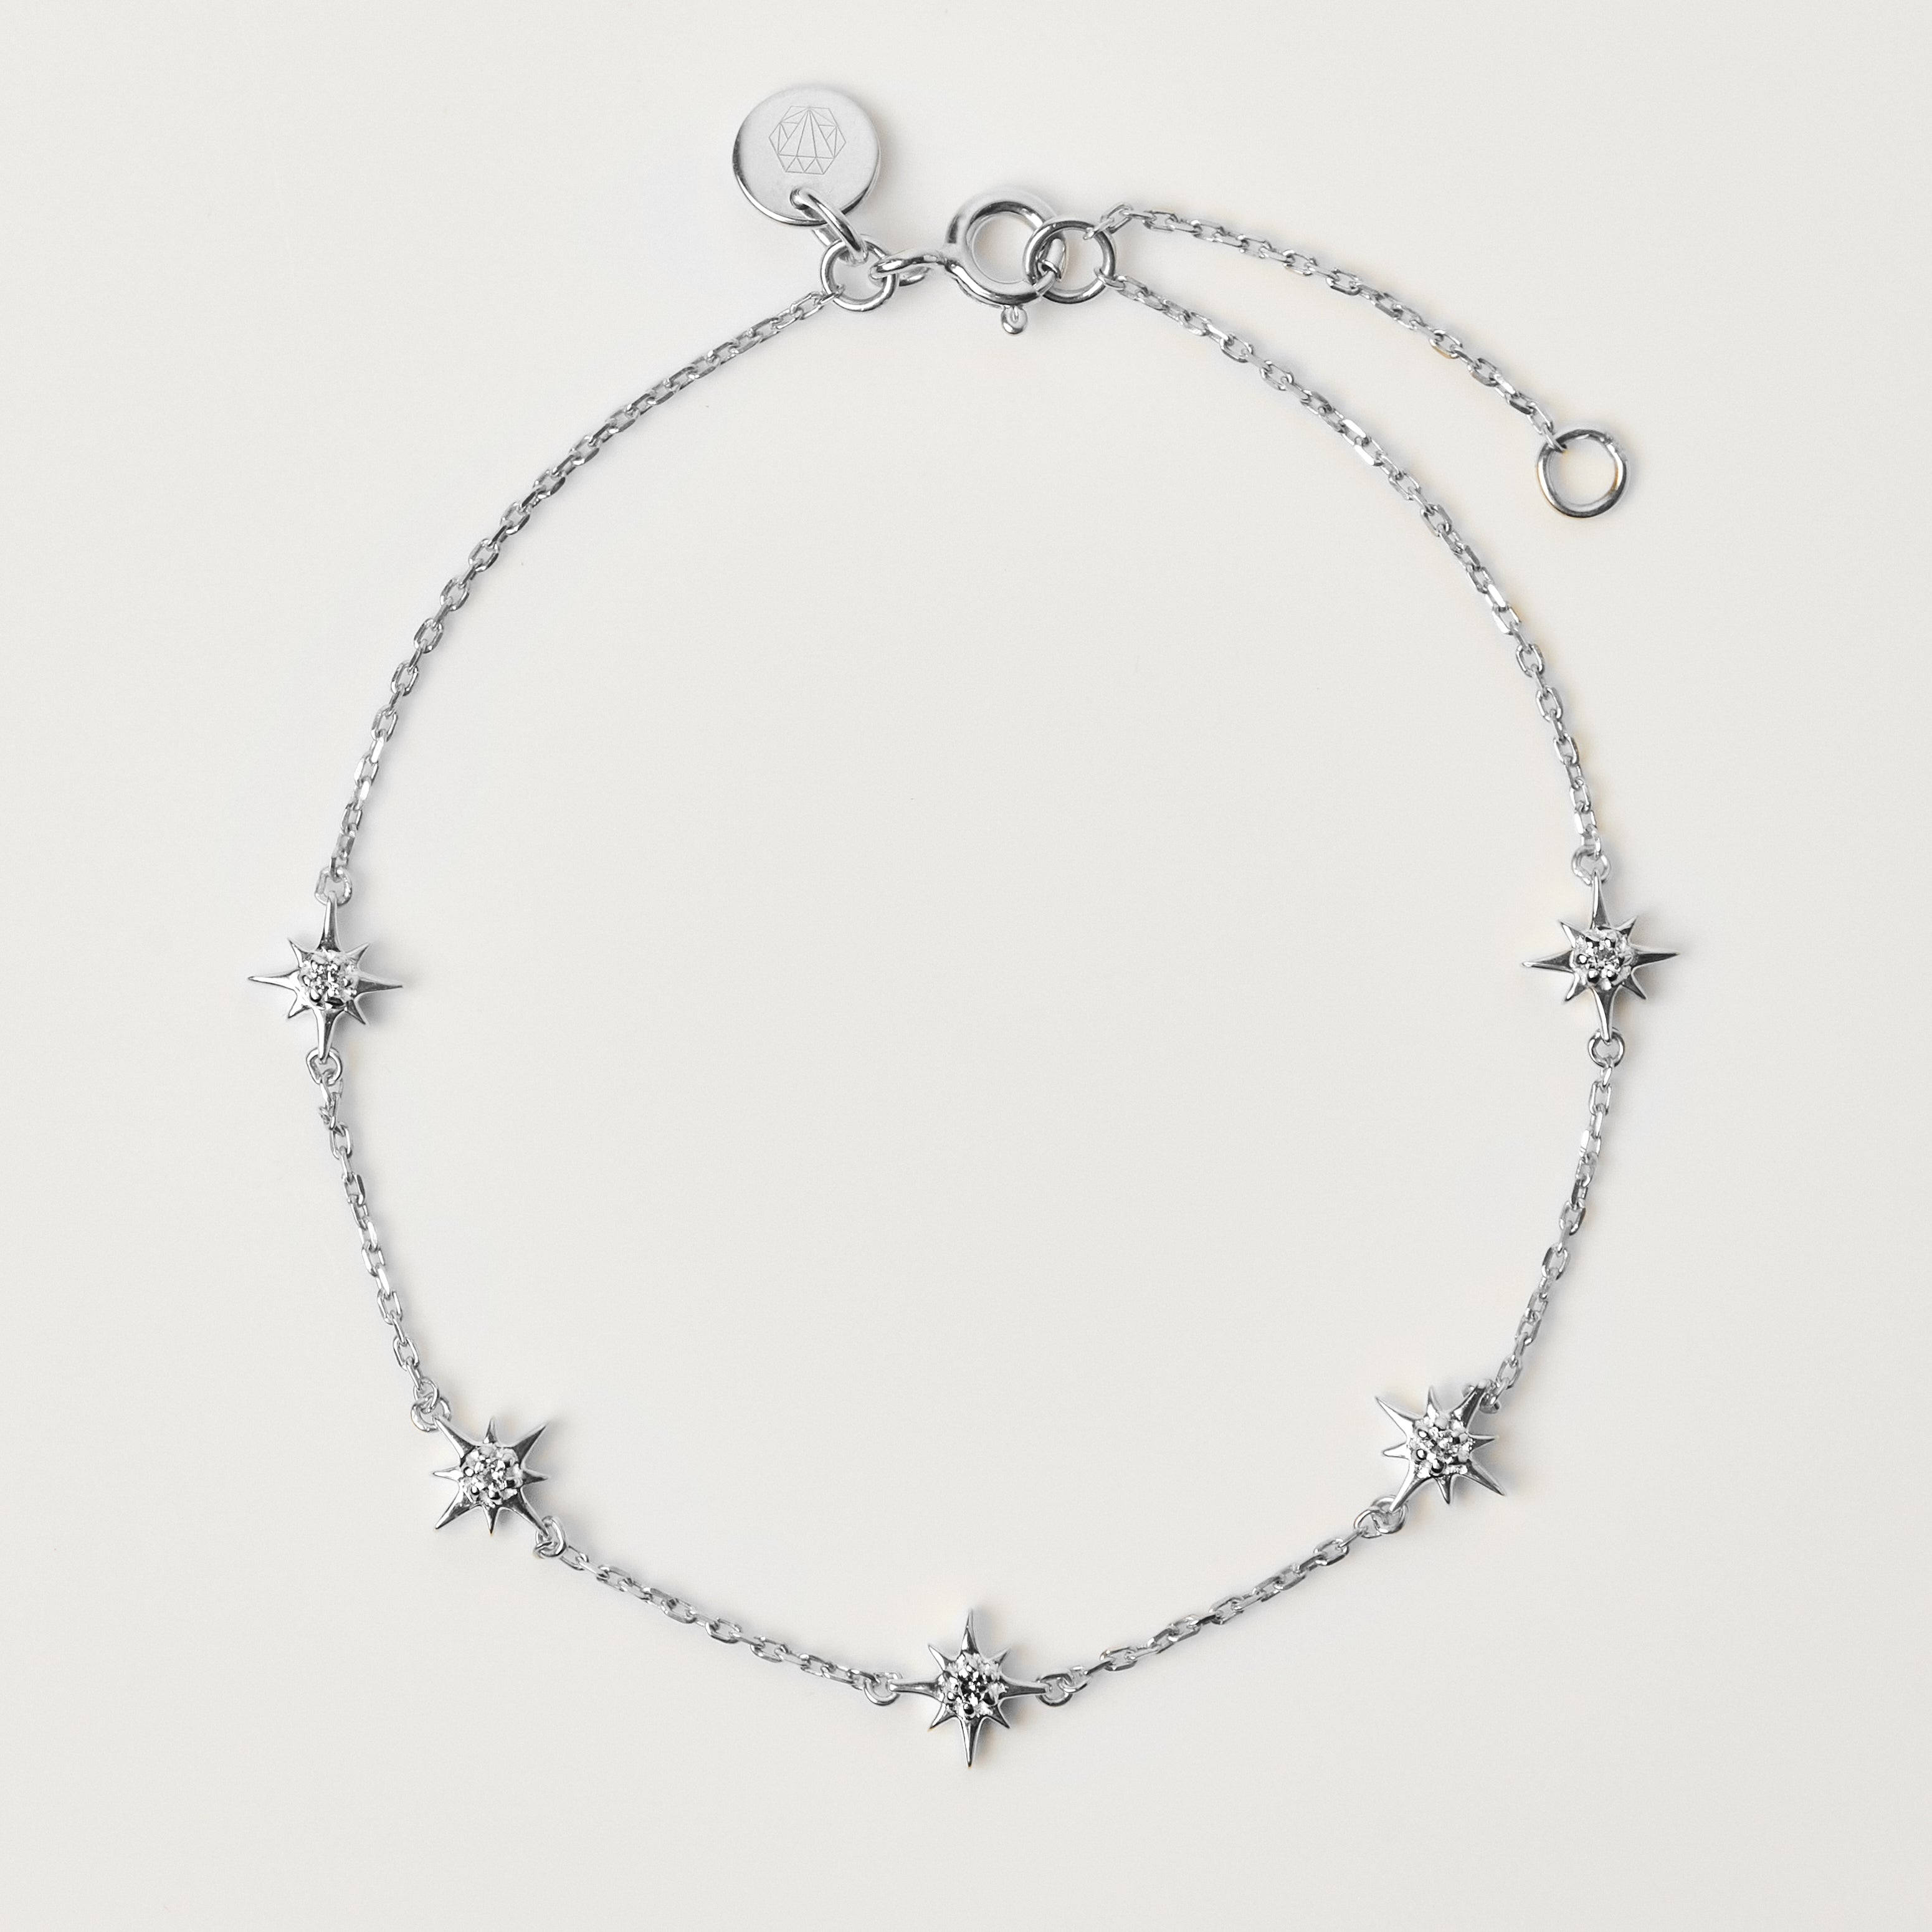 Stunning Sterling Silver Bracelets Handmade in our Workshops